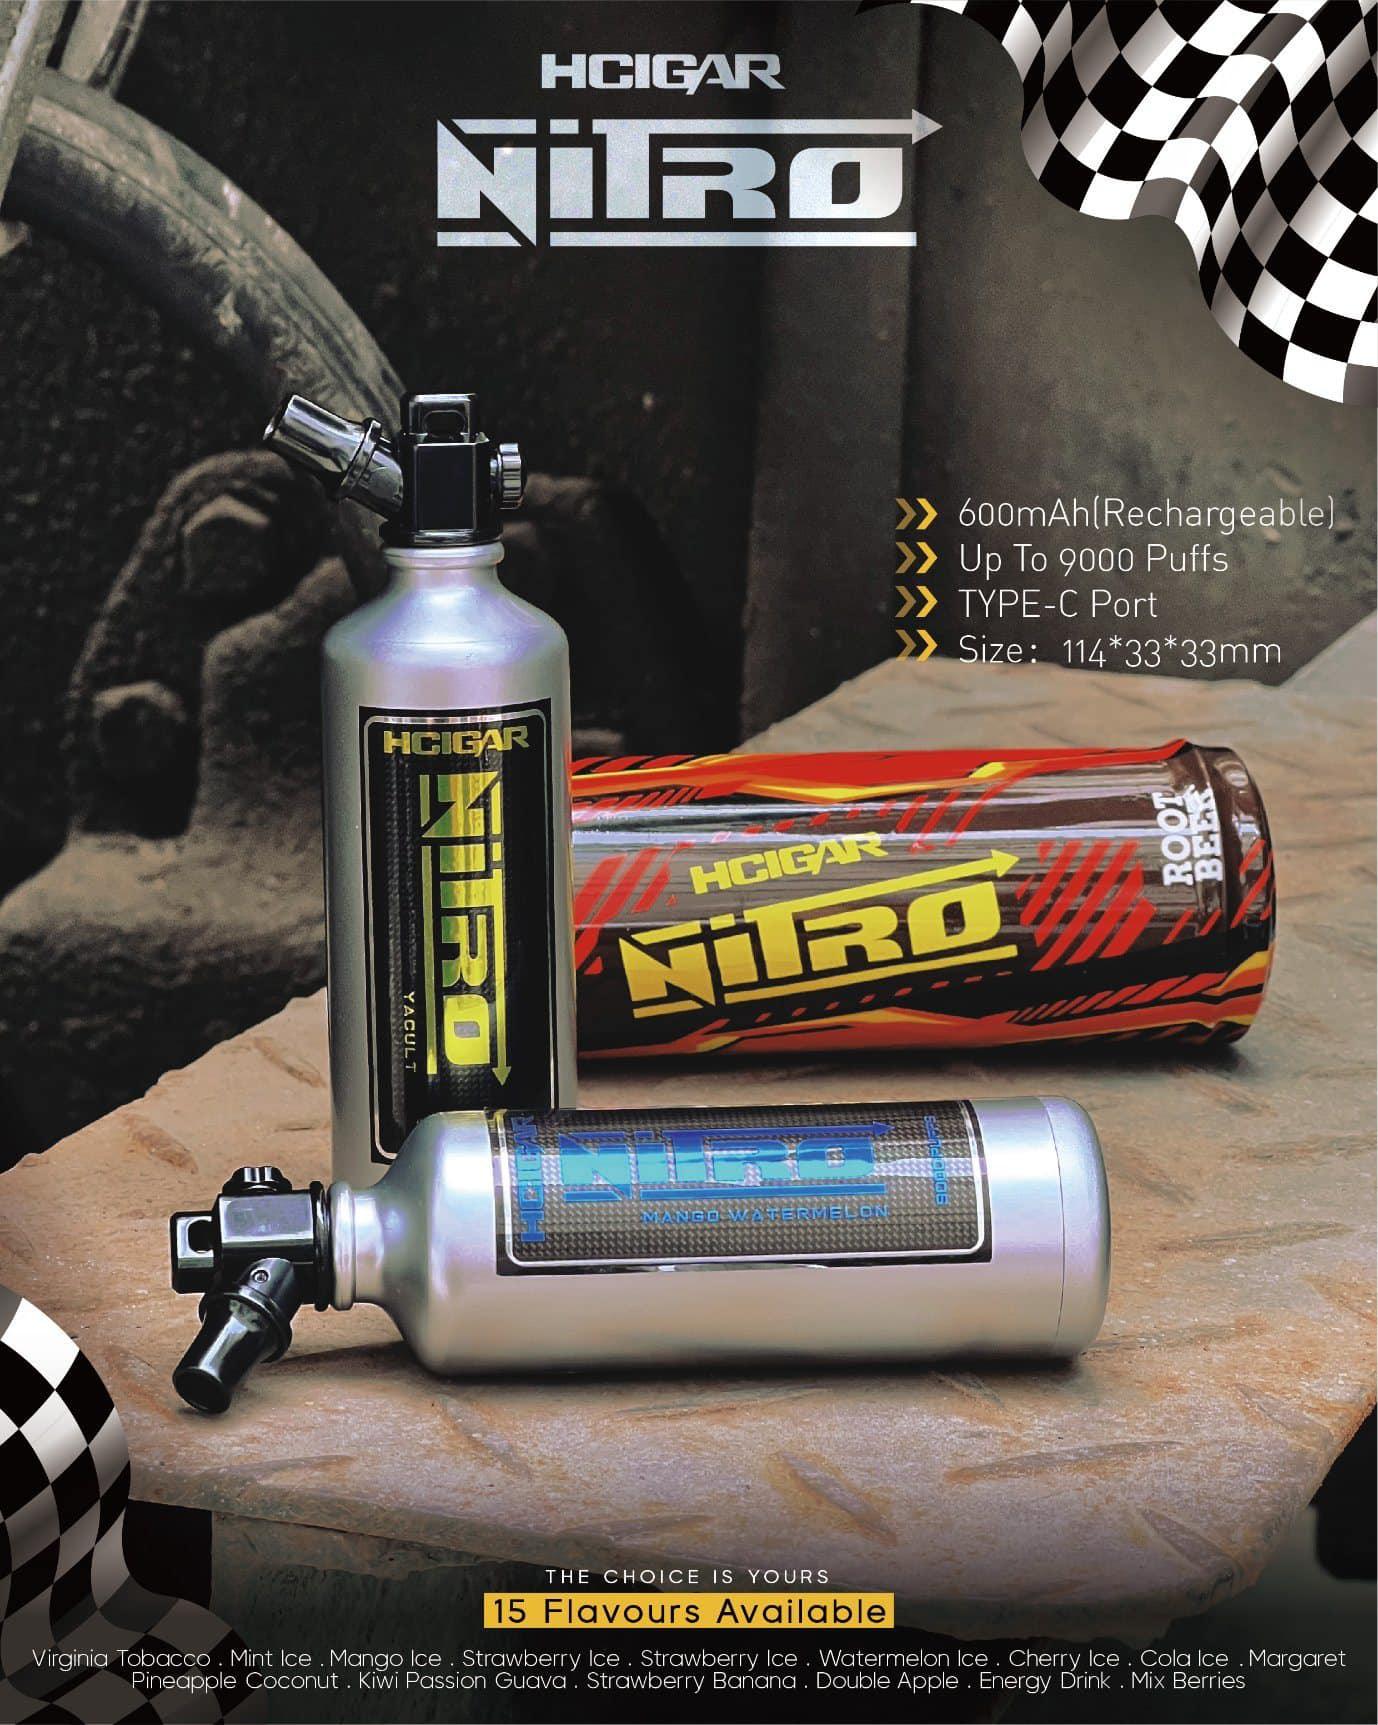 Hcigar Nitro 9000 Rechargeable Disposable (Merlion Vape SG)